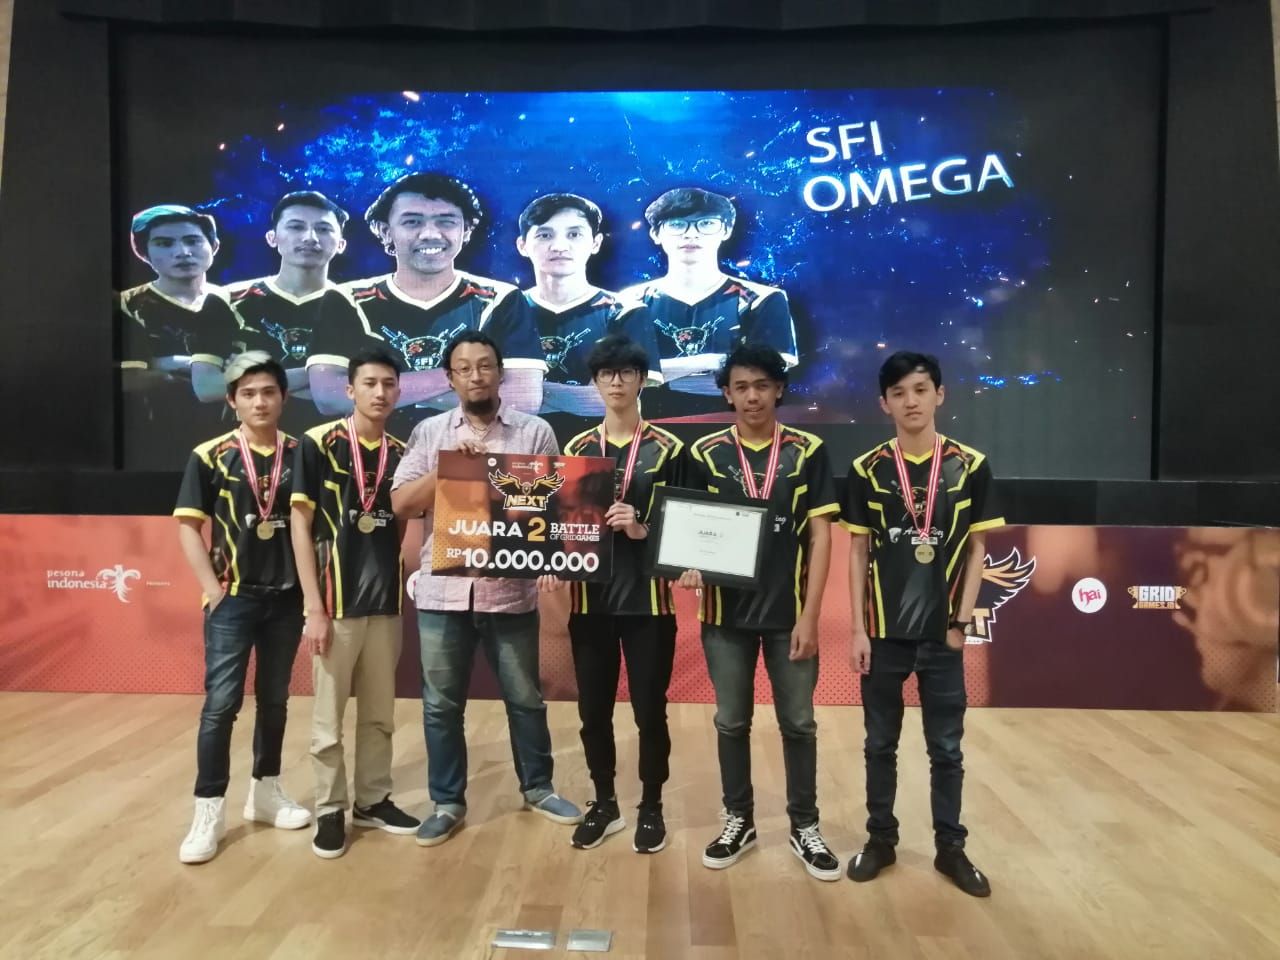 SFI Omega Juara 2